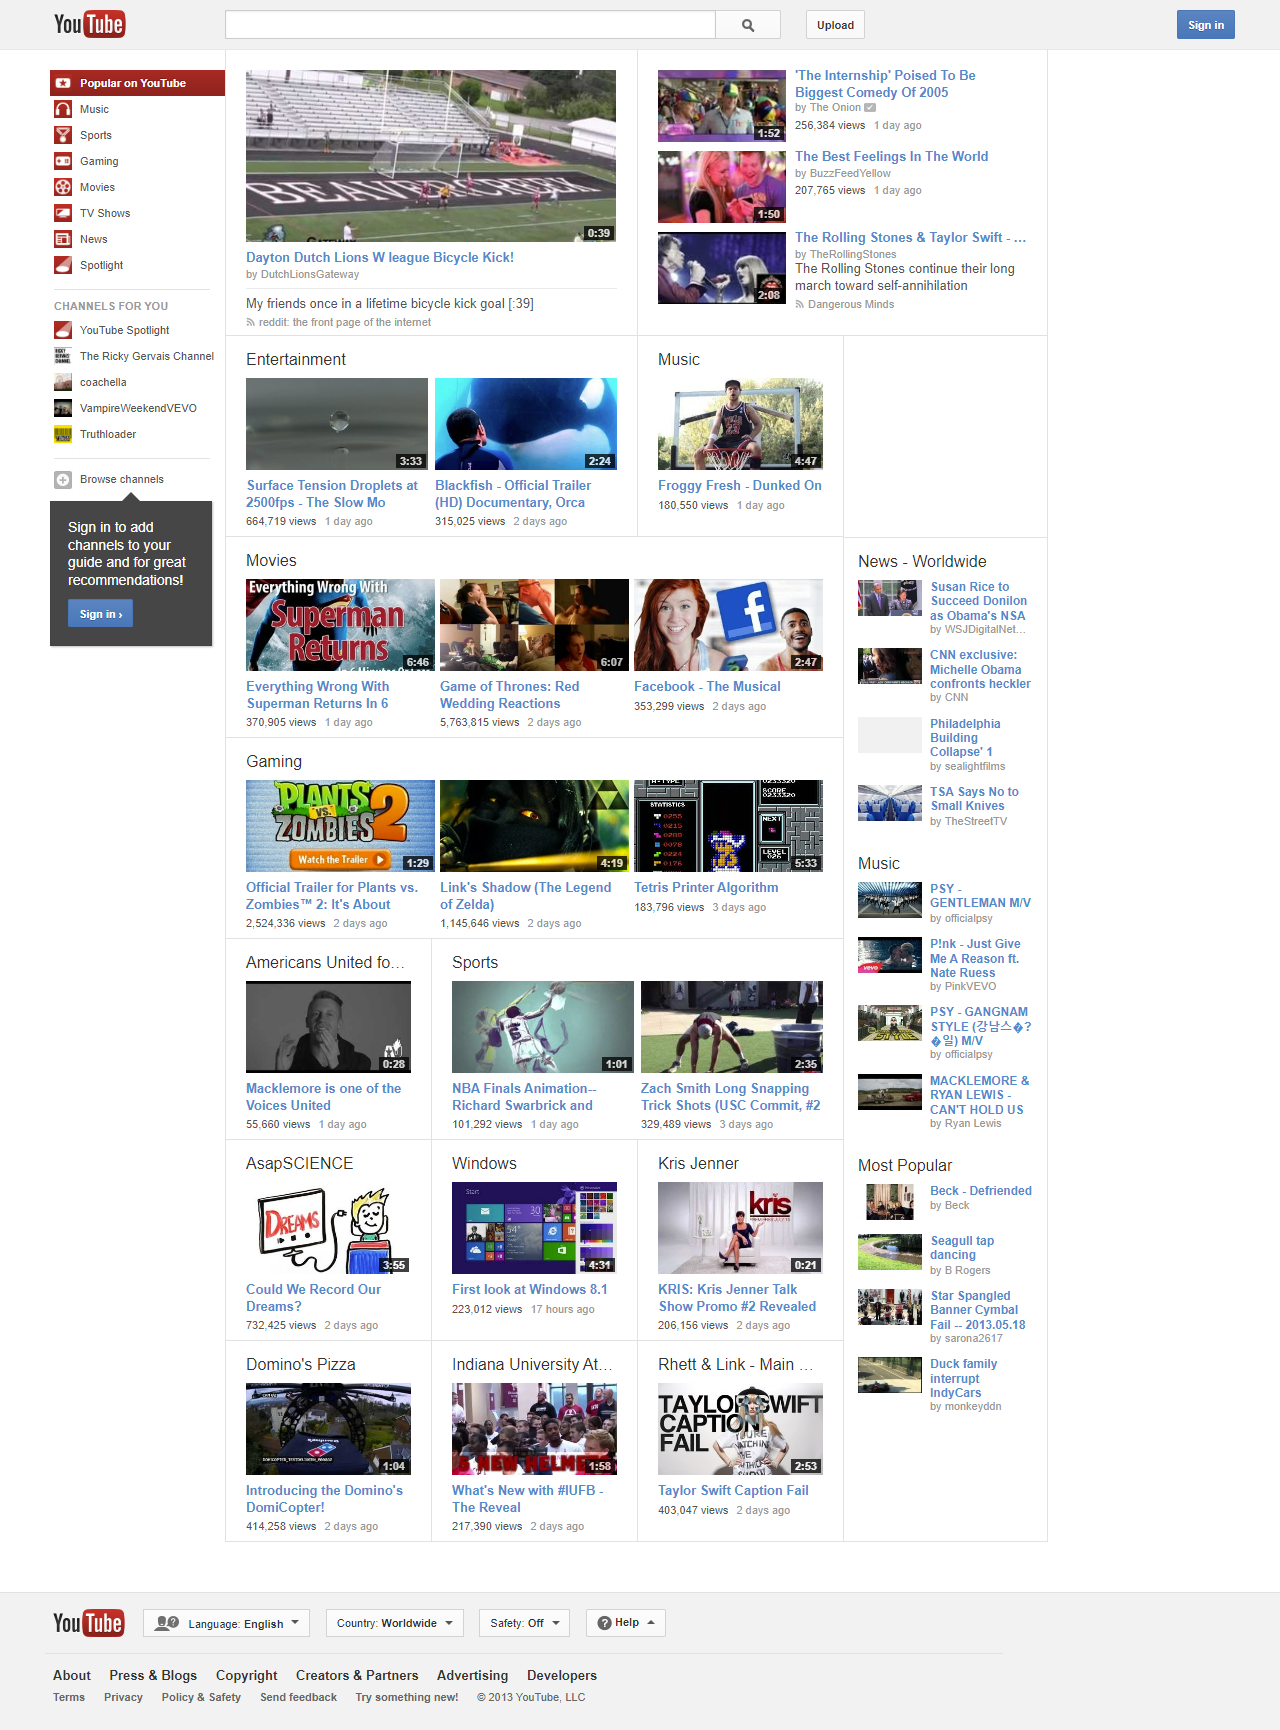 YouTube website in 2013